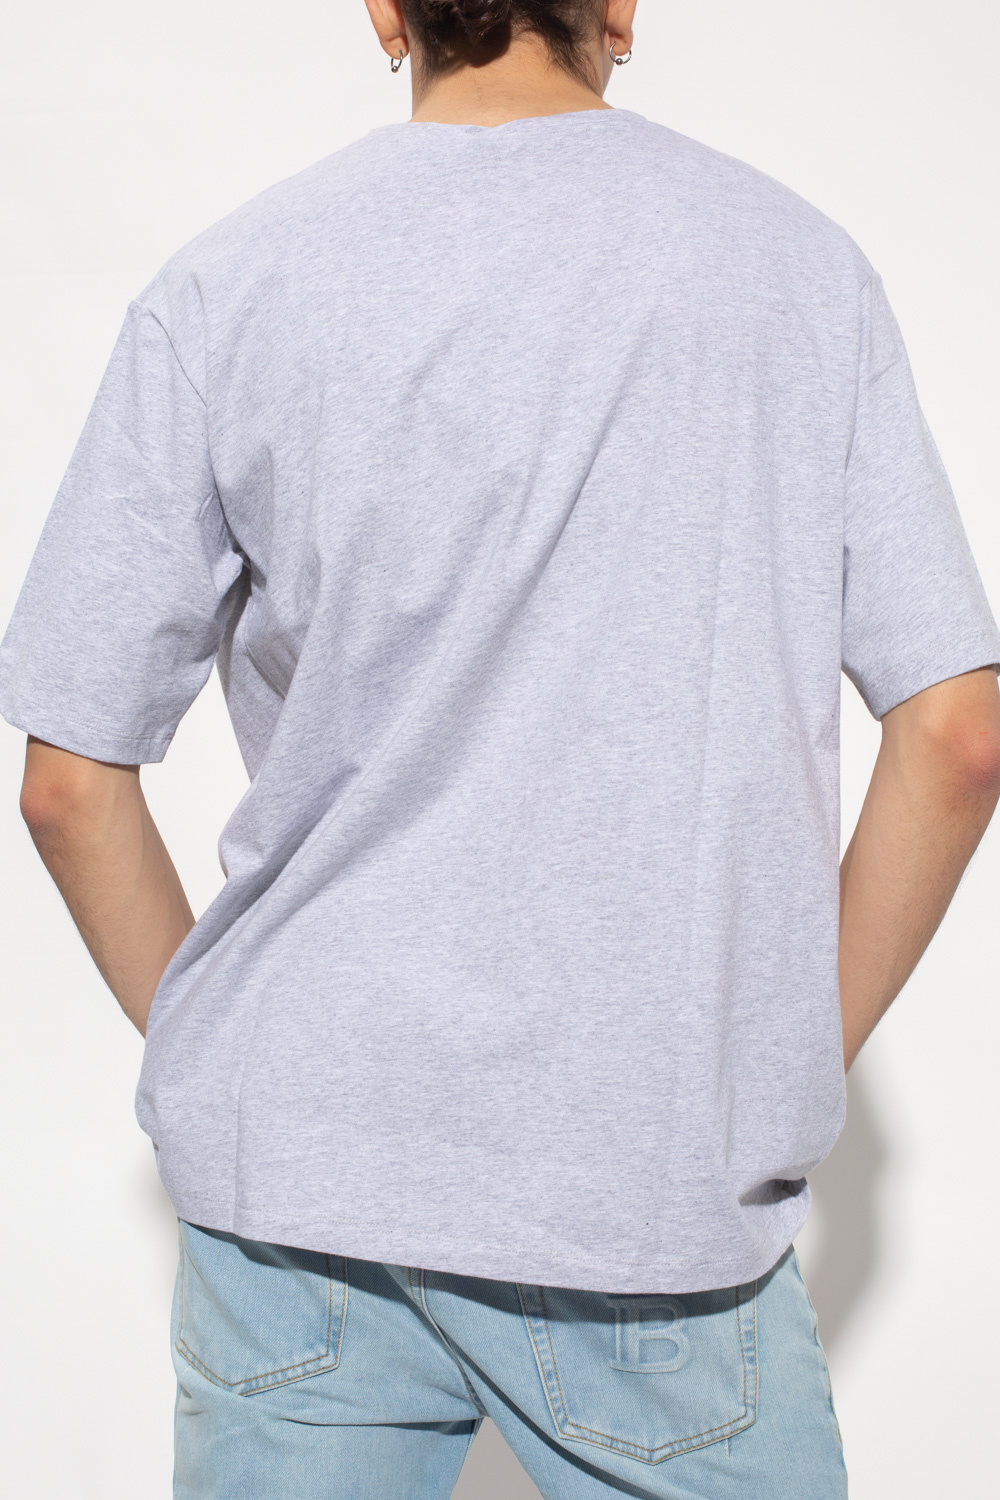 balmain sweatshirt Printed T-shirt